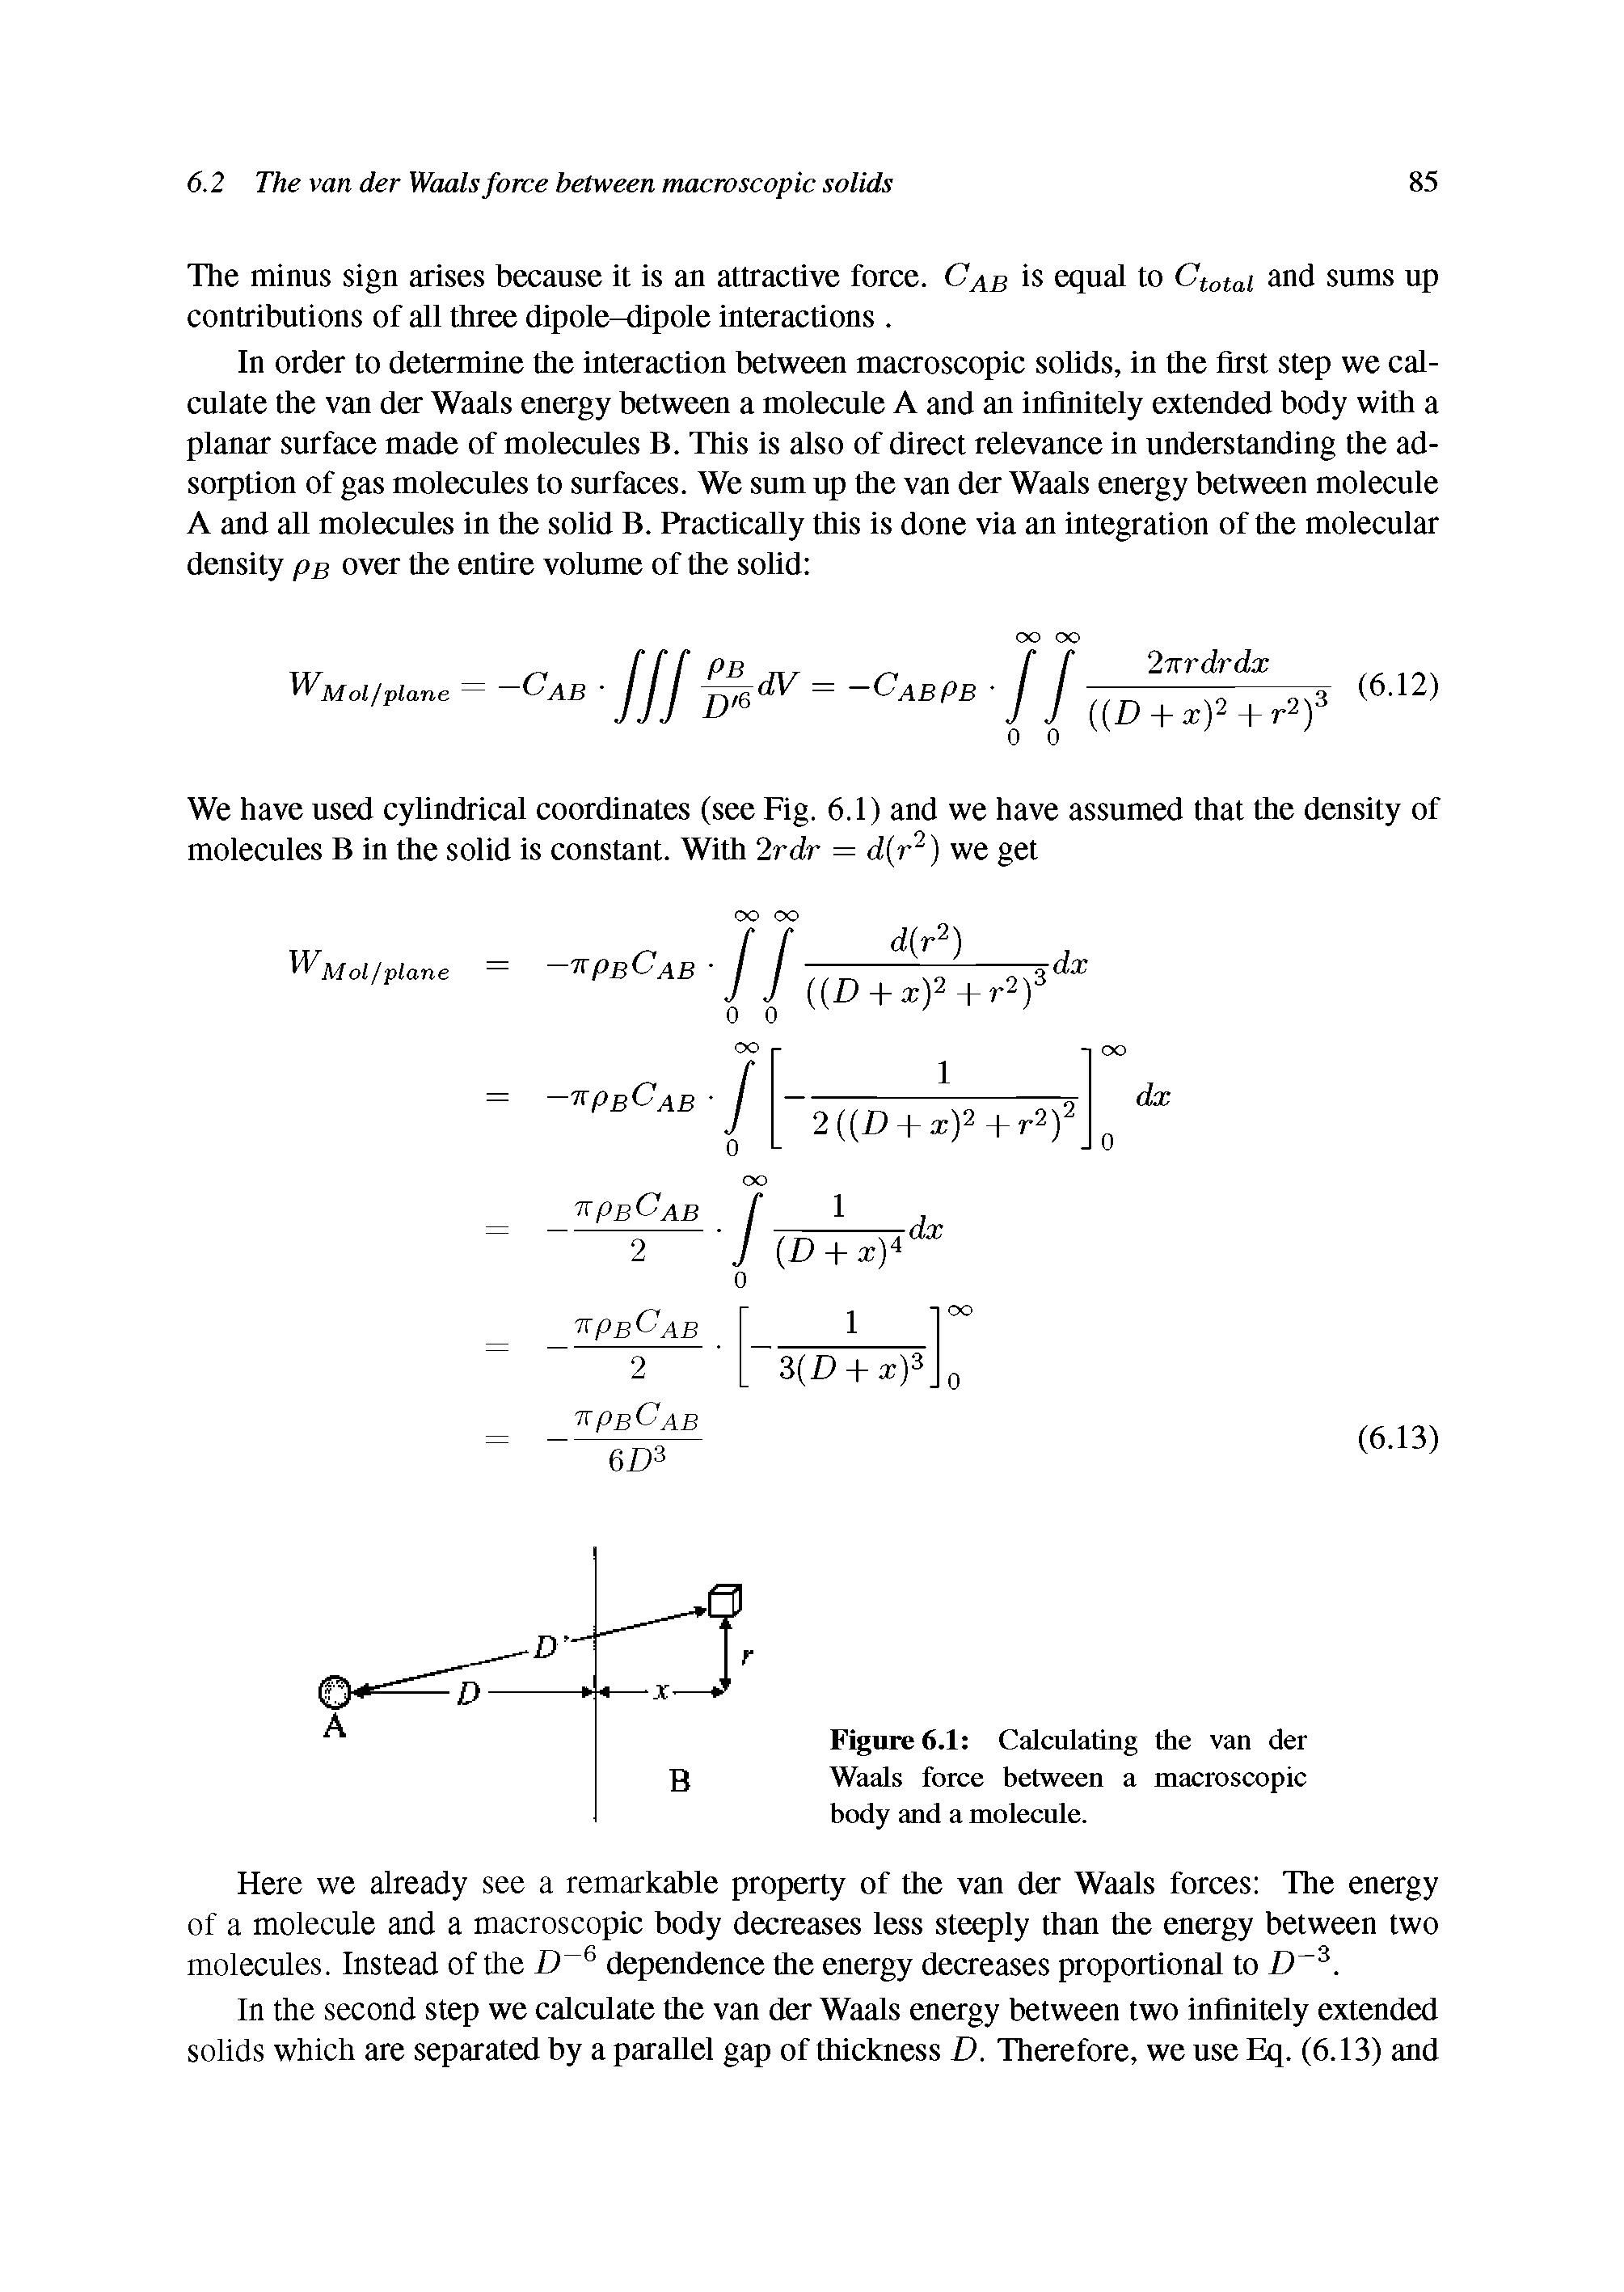 Figure 6.1 Calculating the van der Waals force between a macroscopic body and a molecule.